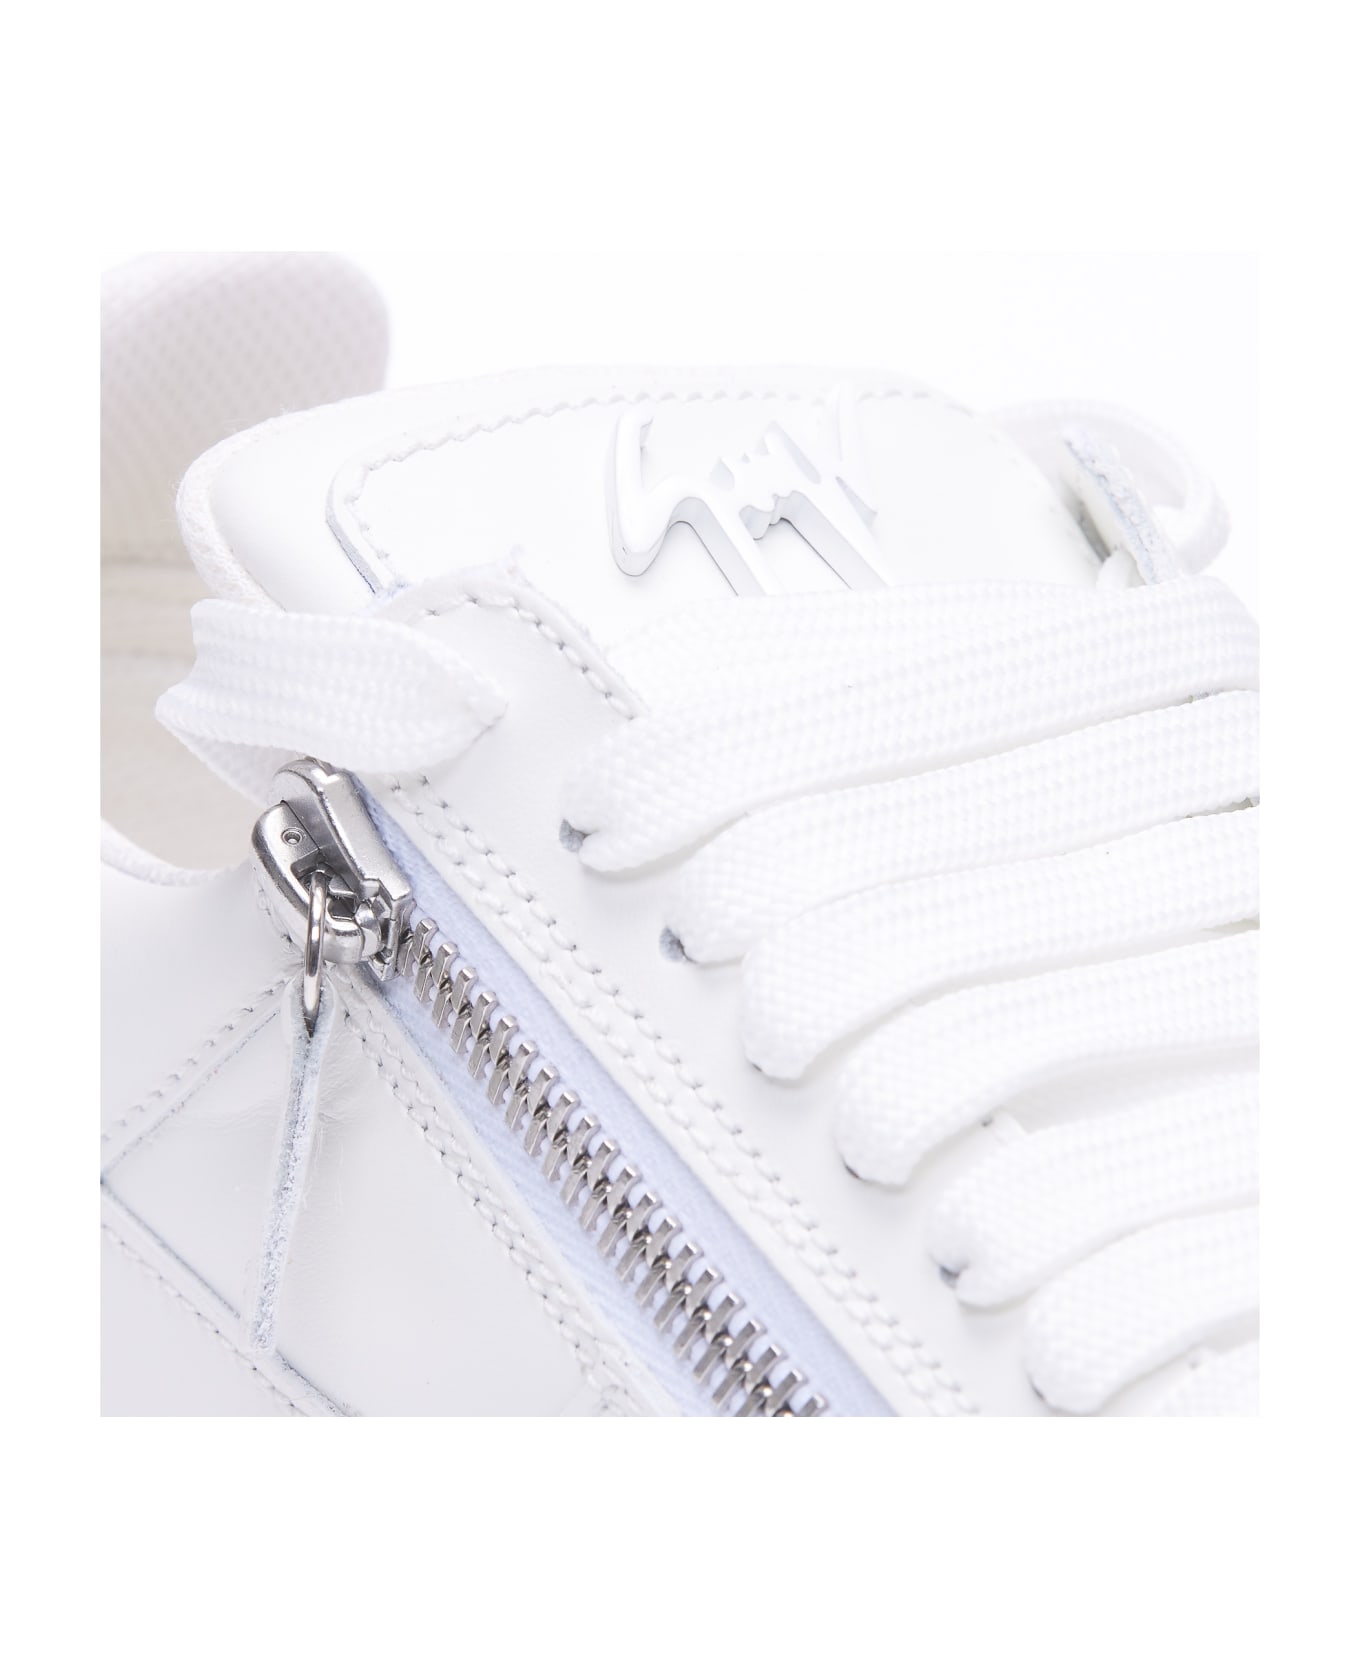 Giuseppe Zanotti Gz94 Sneakers - White